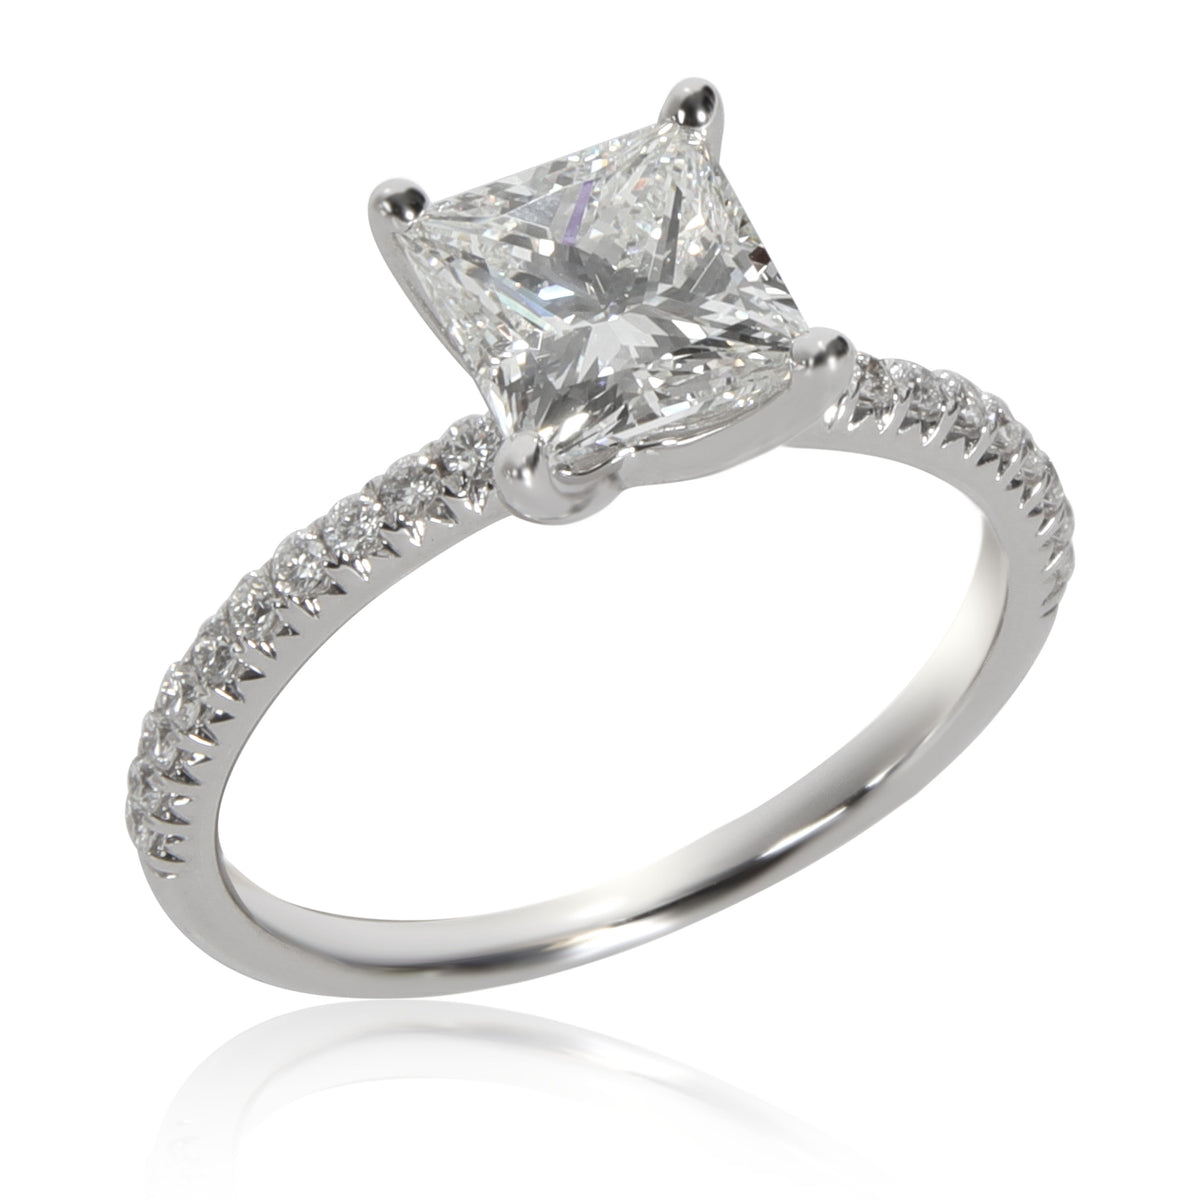 James Allen Petite Pave Diamond Engagement Ring in 14K White Gold H VS2 1.34 CTW